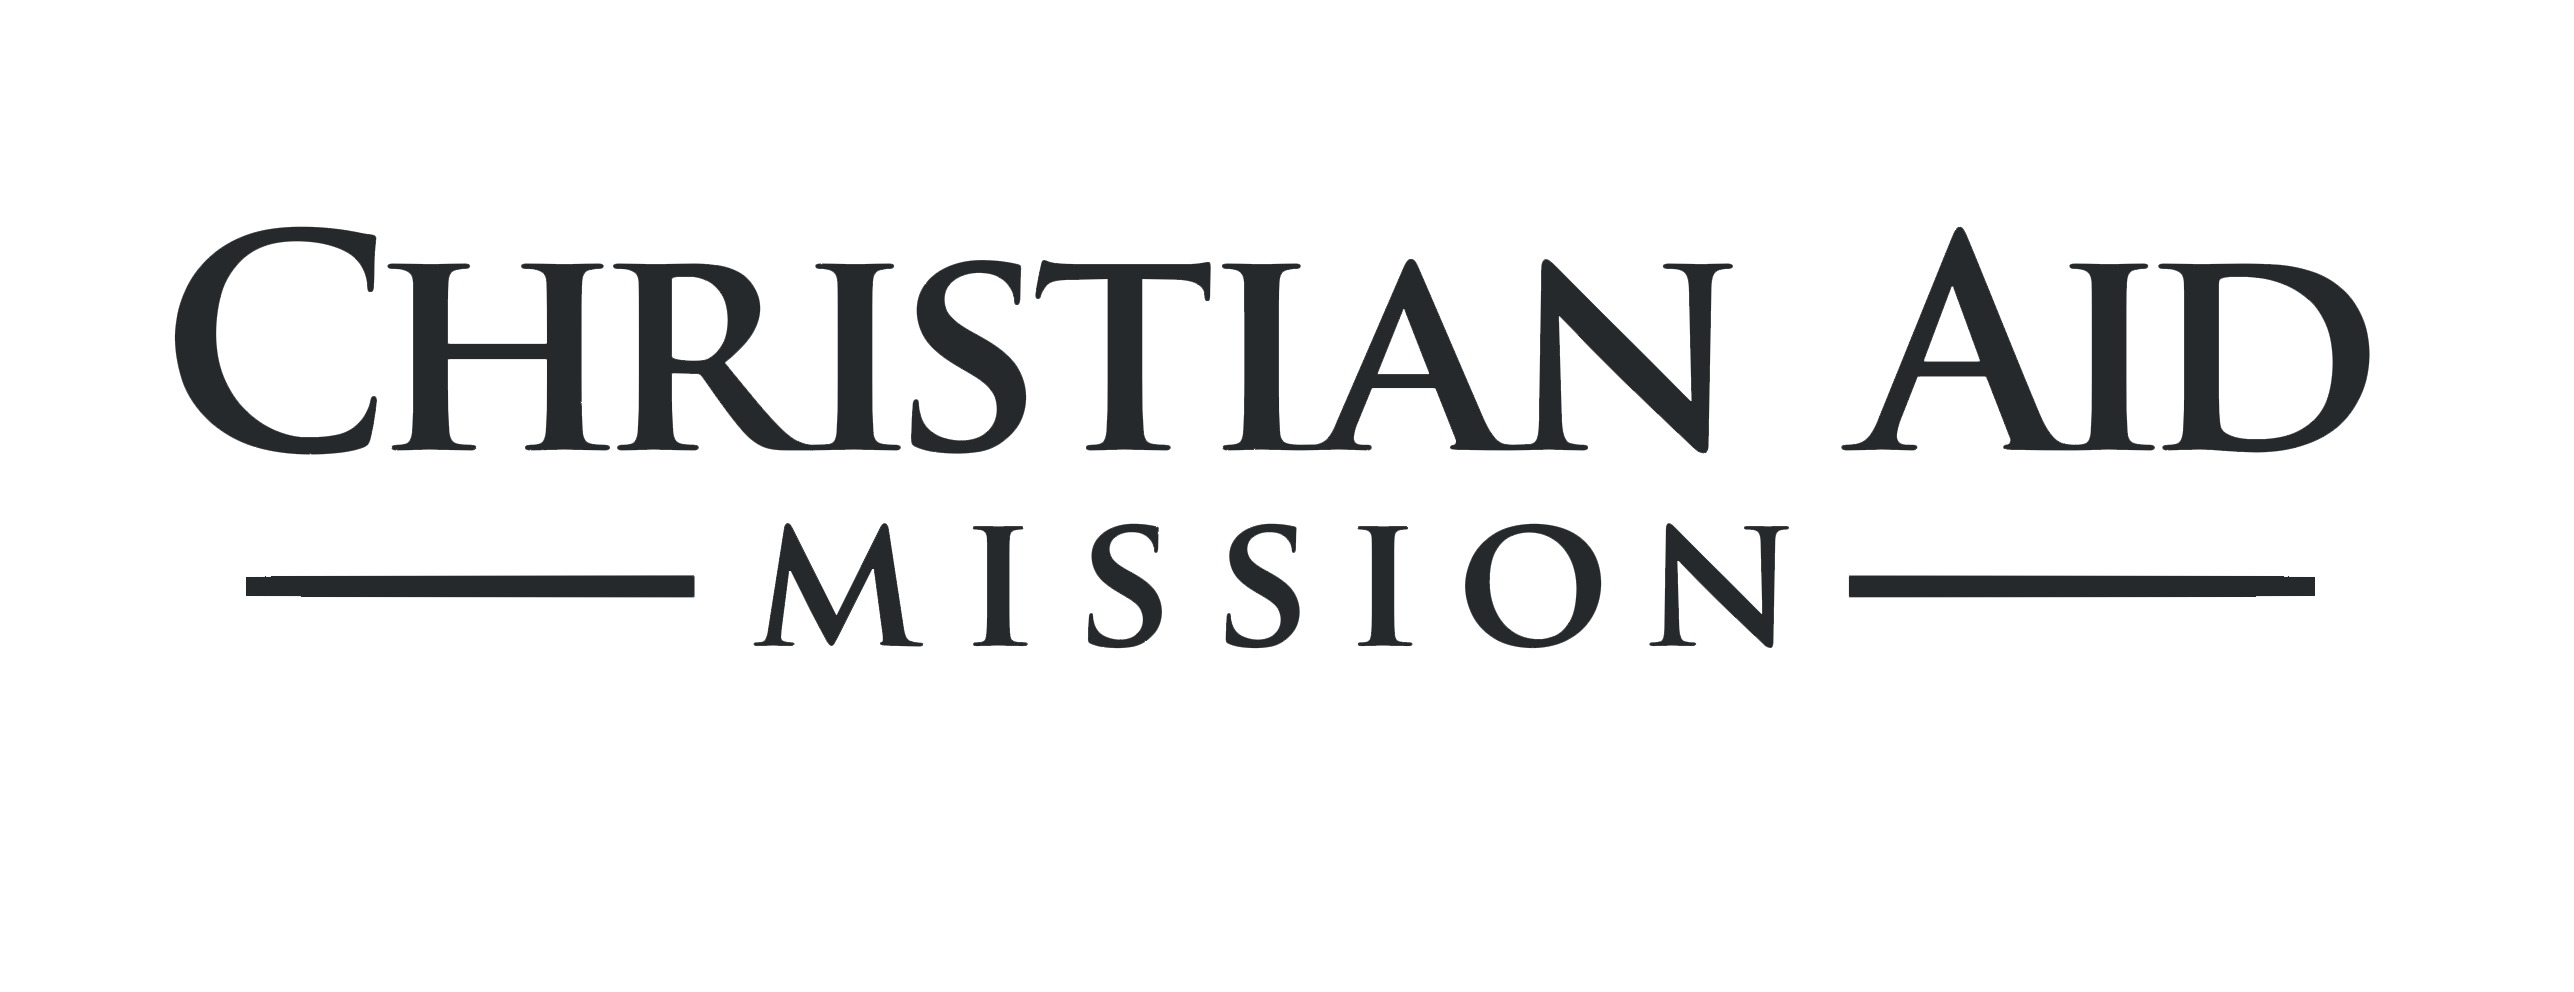 Christian Aid Mission